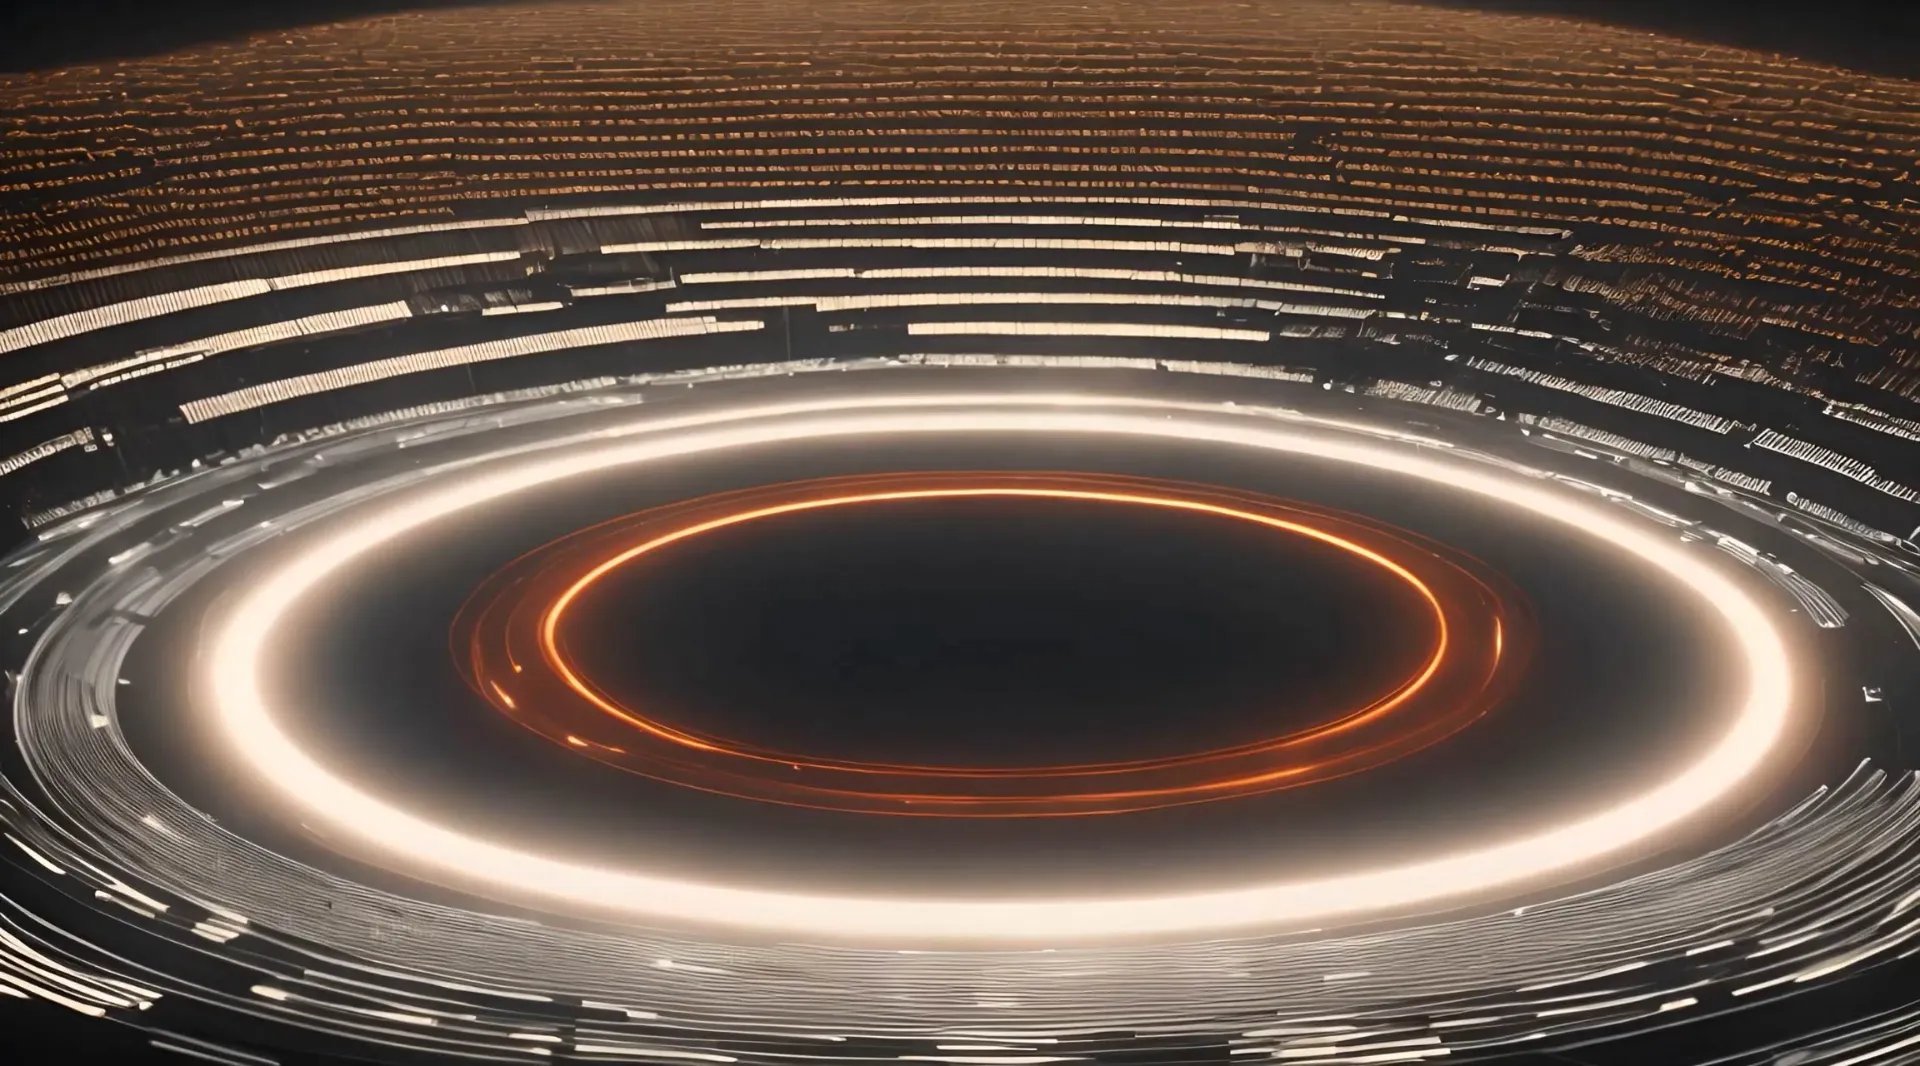 Futuristic Orbit Rings Light Display